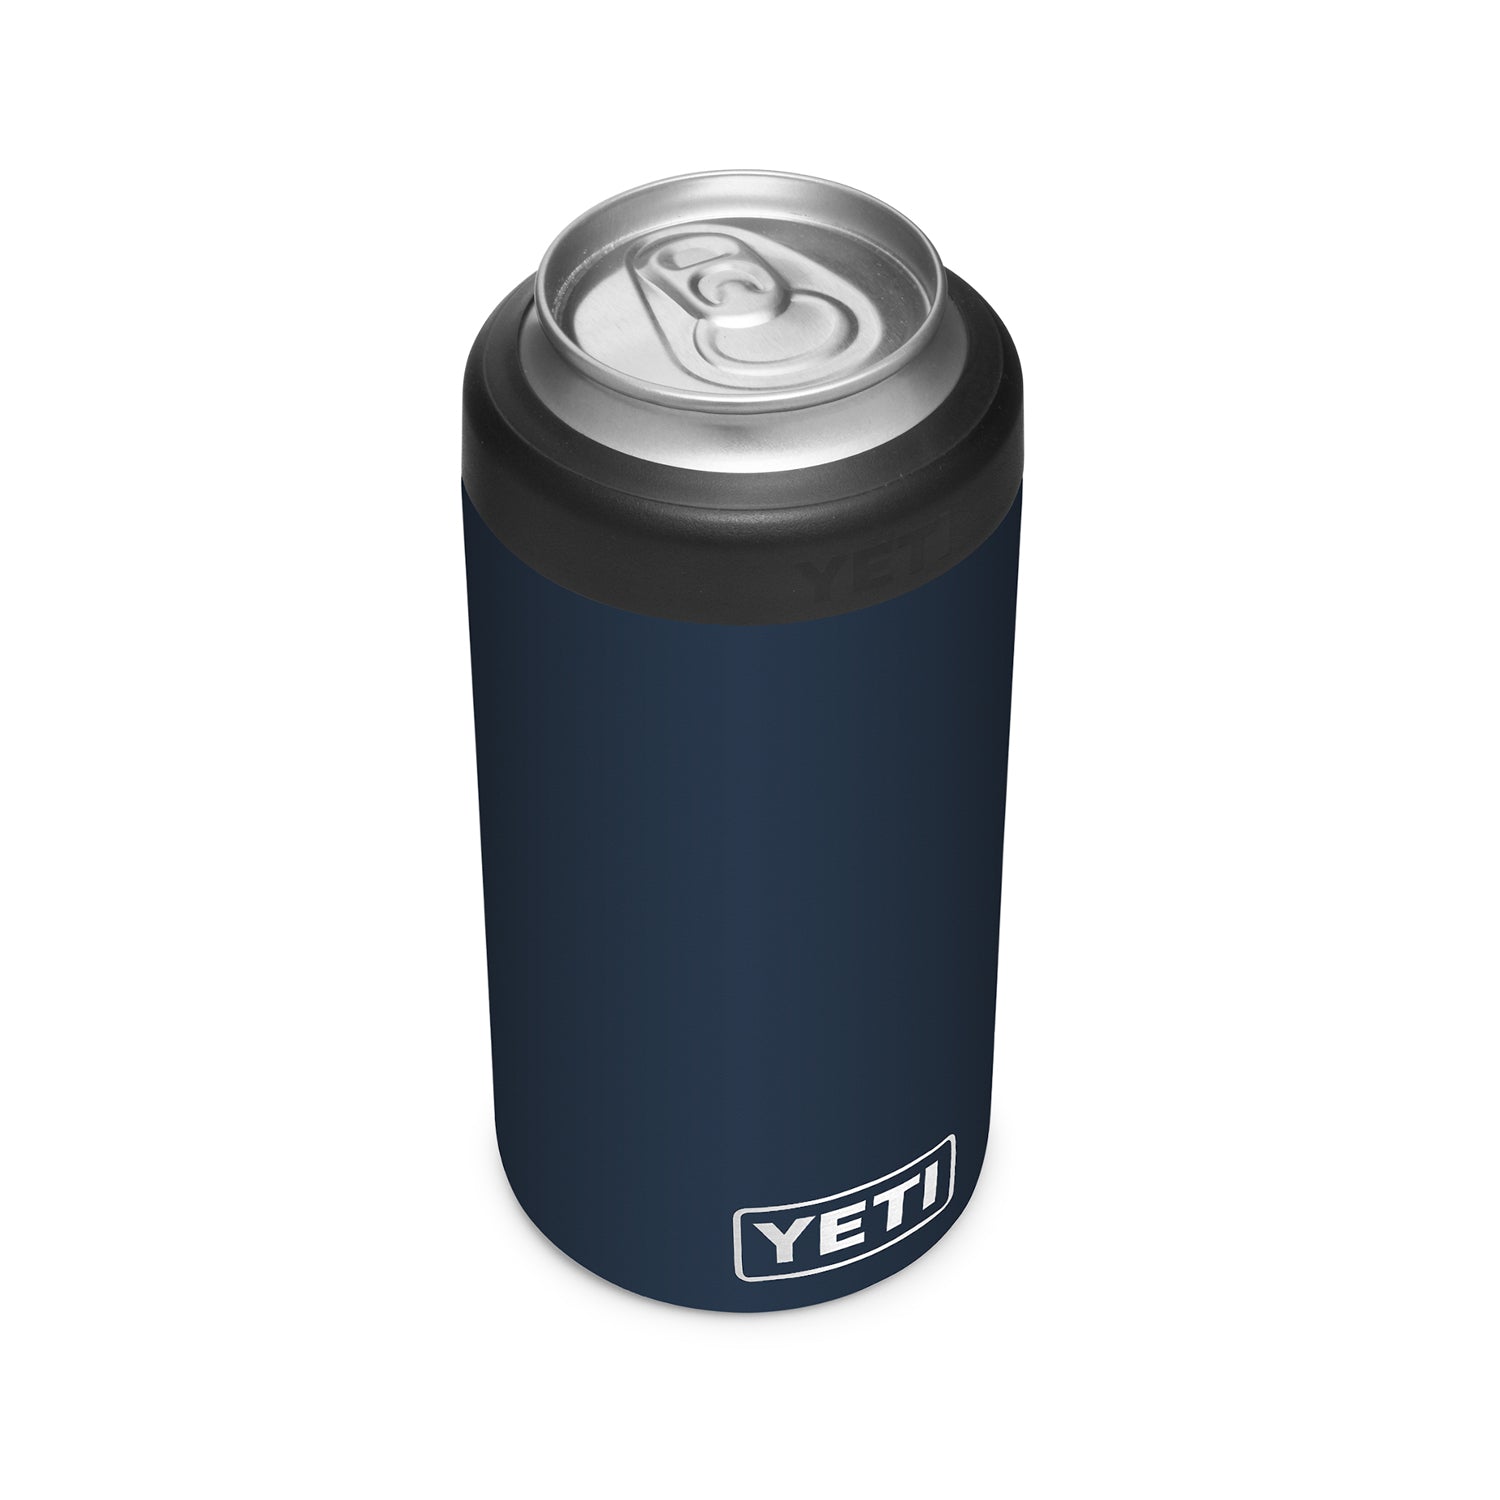 2x YETI rambler colster, stainless steel, screw top lids, insulator for  drinks